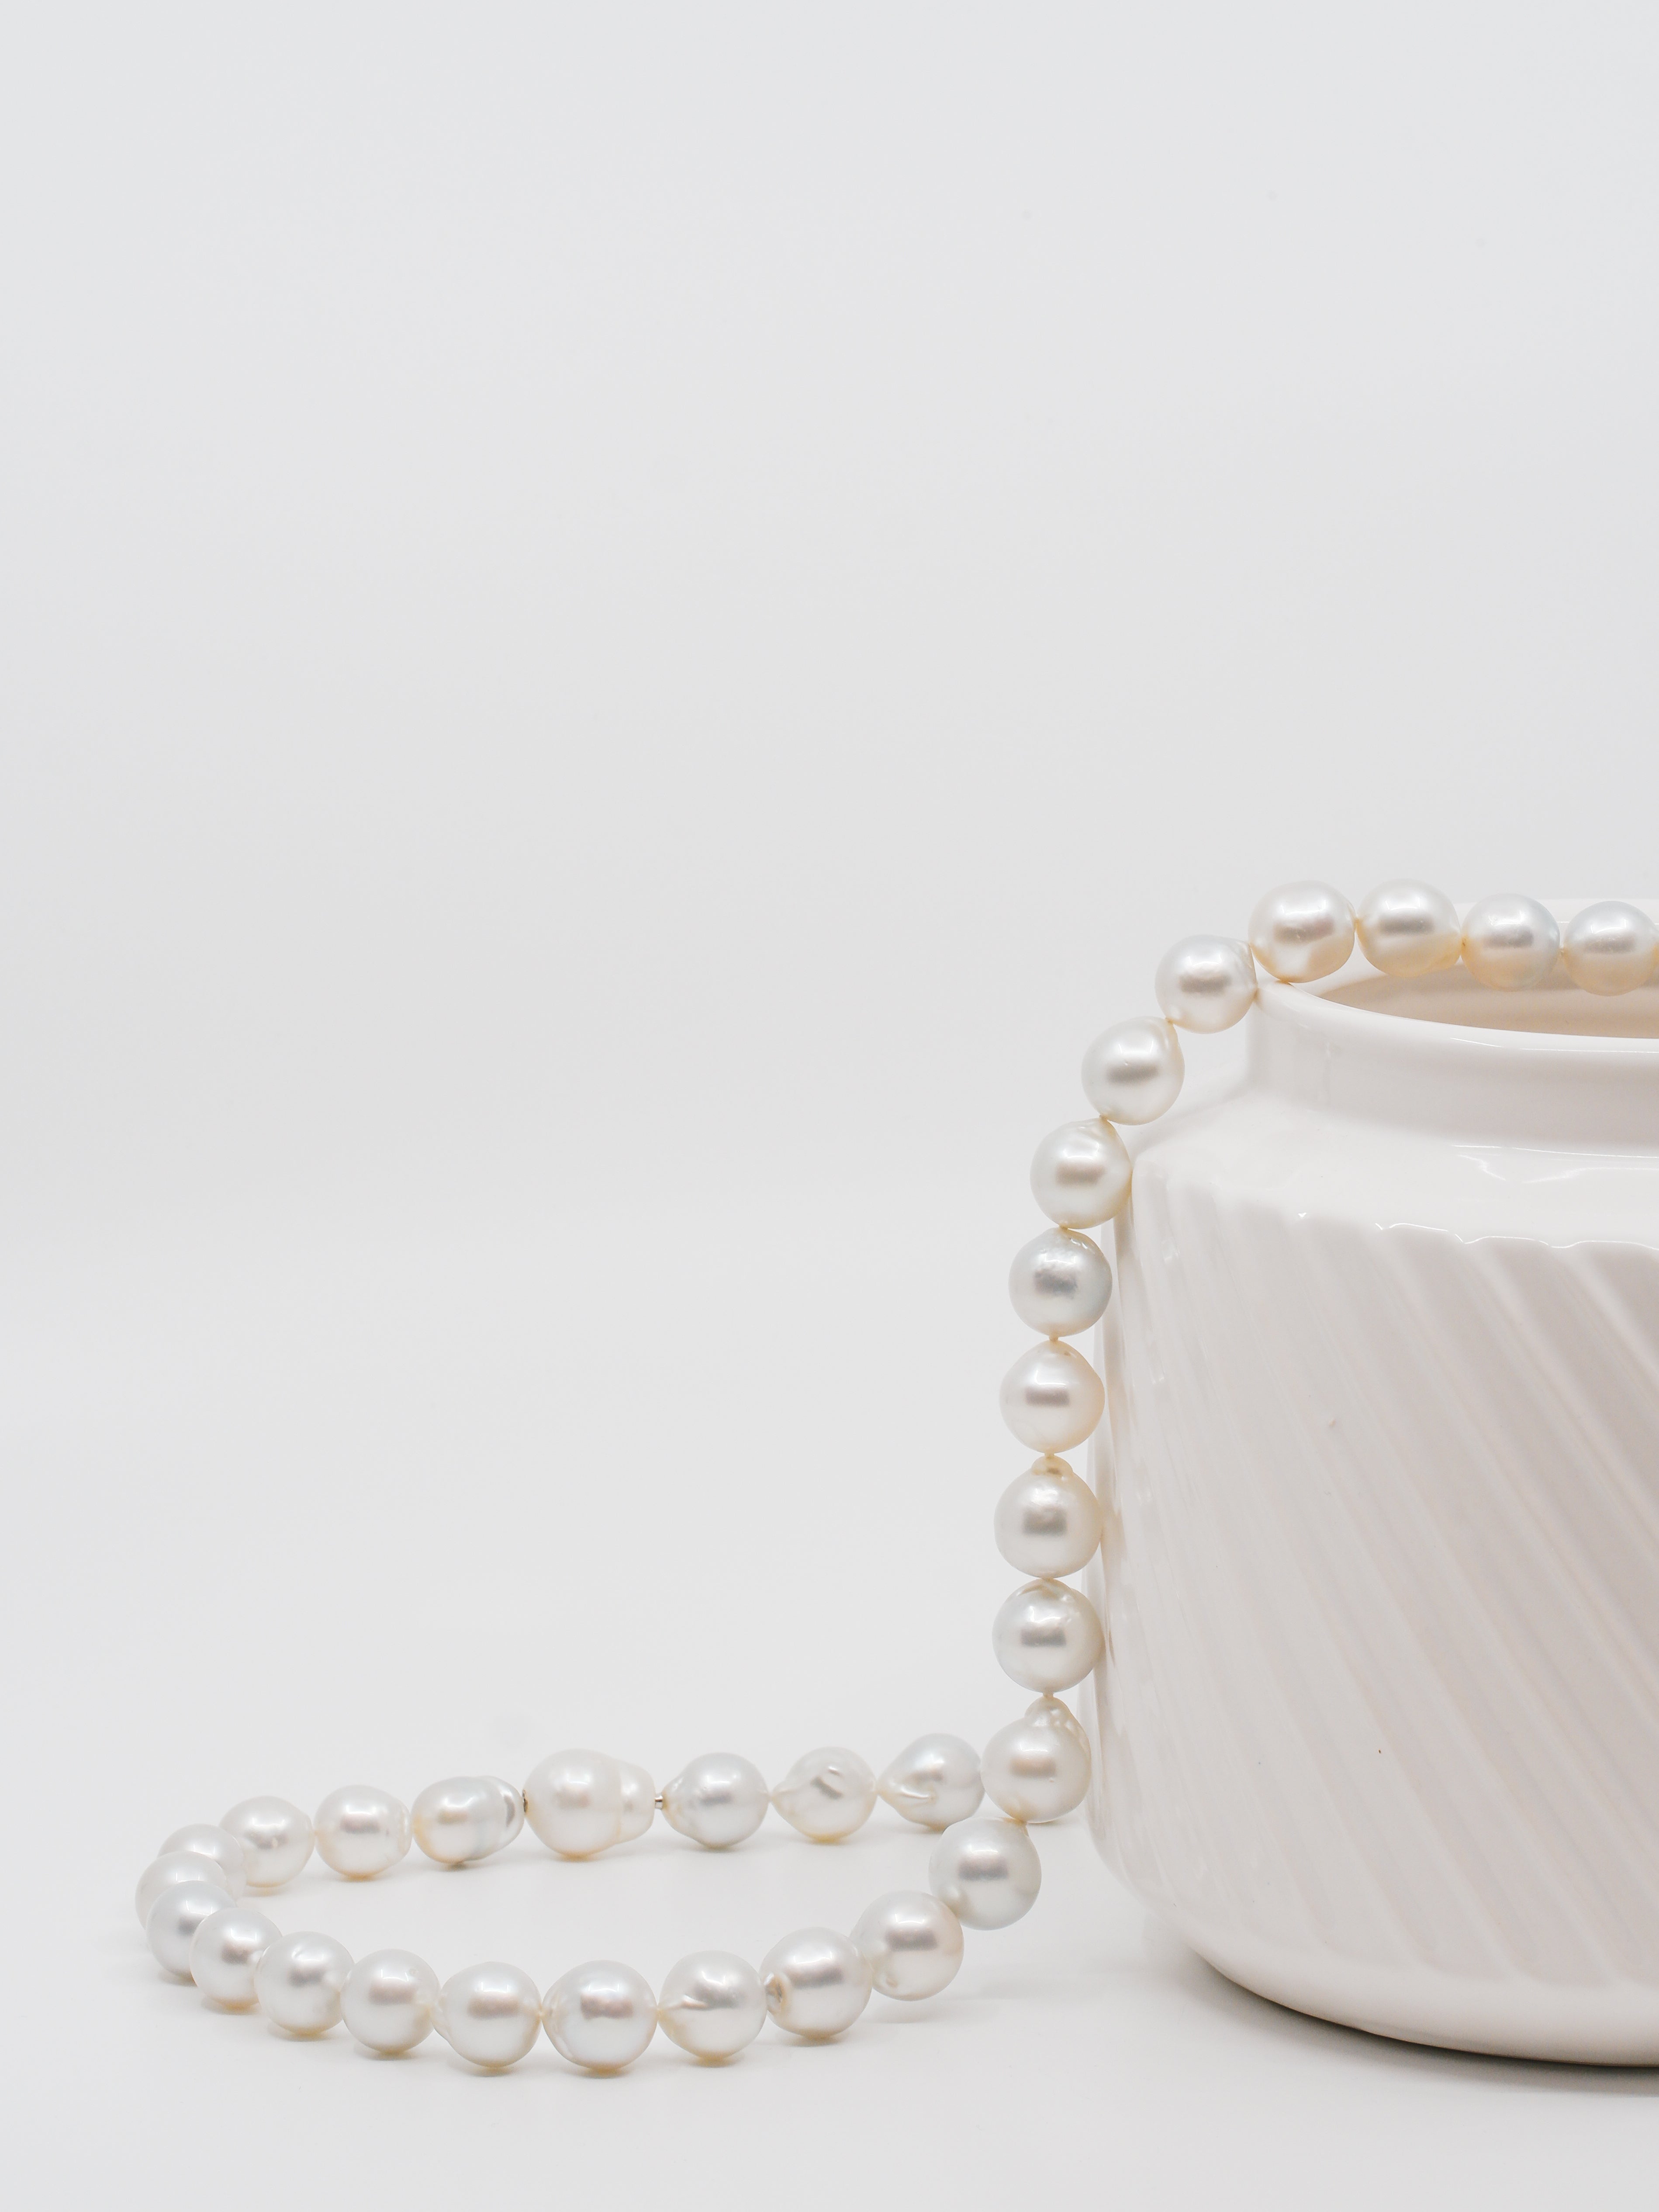 australian south sea pearl strand draped over white vase.